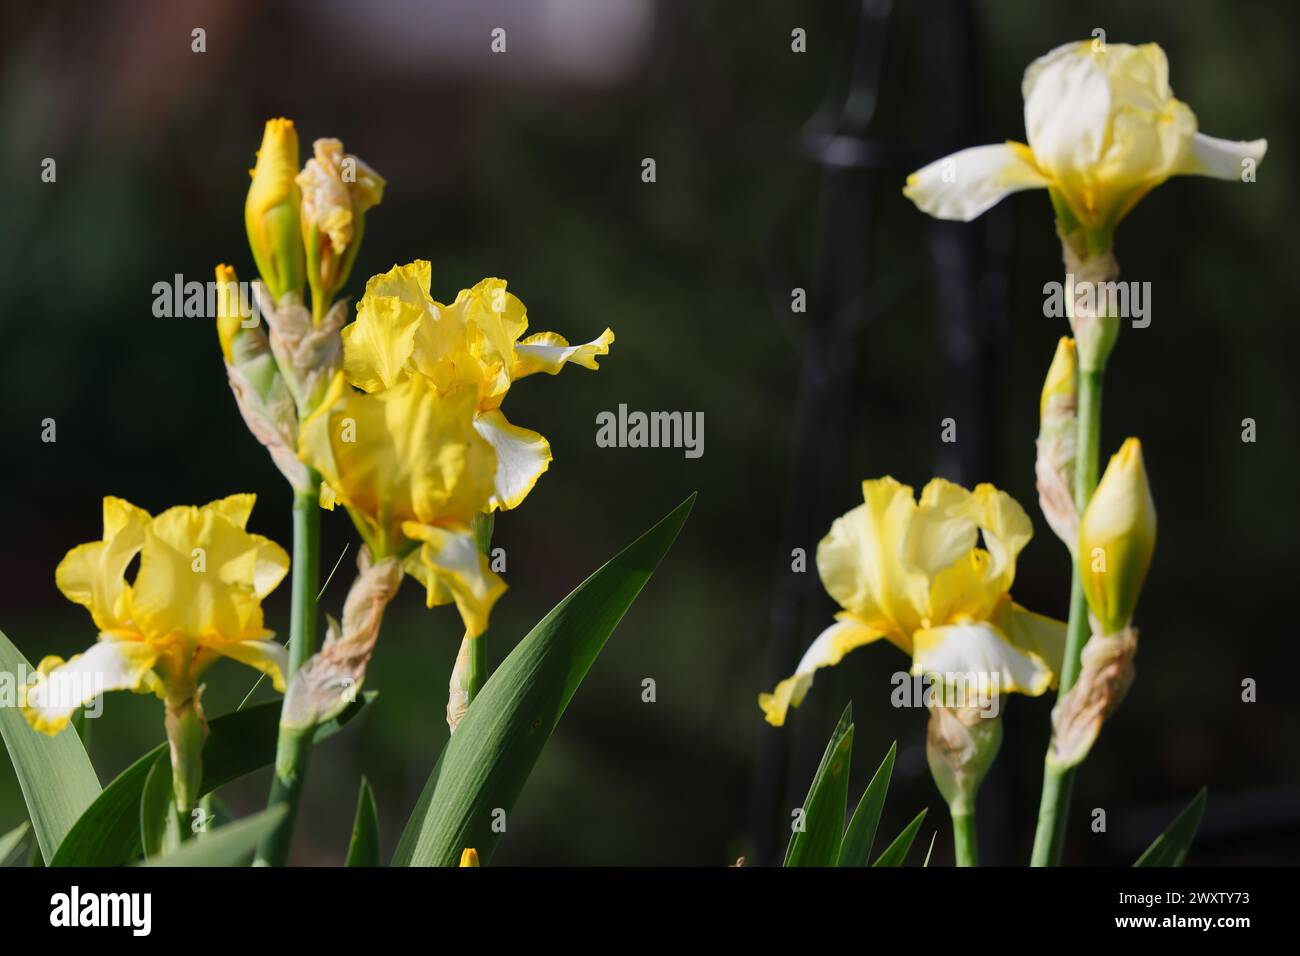 The vibrant yellow irises in full bloom Stock Photo